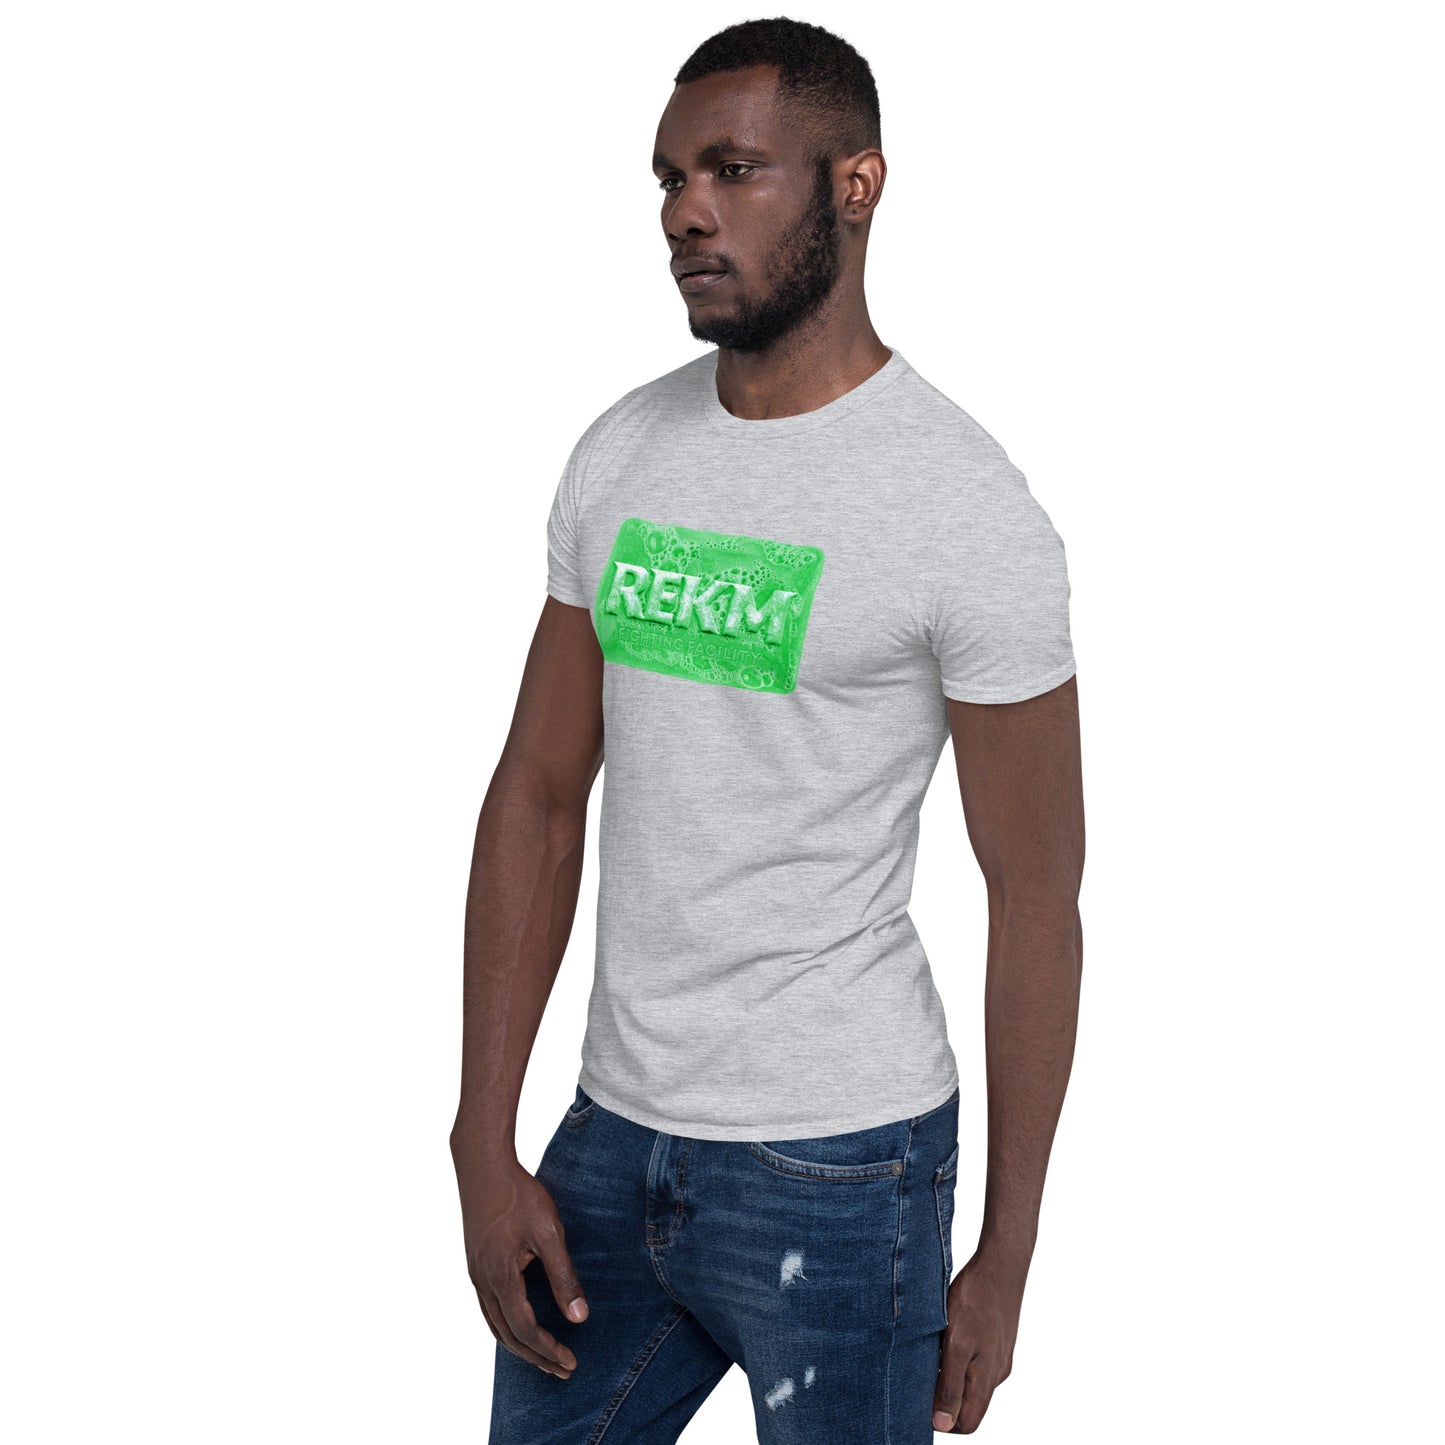 'Green REKM Fighting Facility Edition' Short-Sleeve MEN's T-Shirt